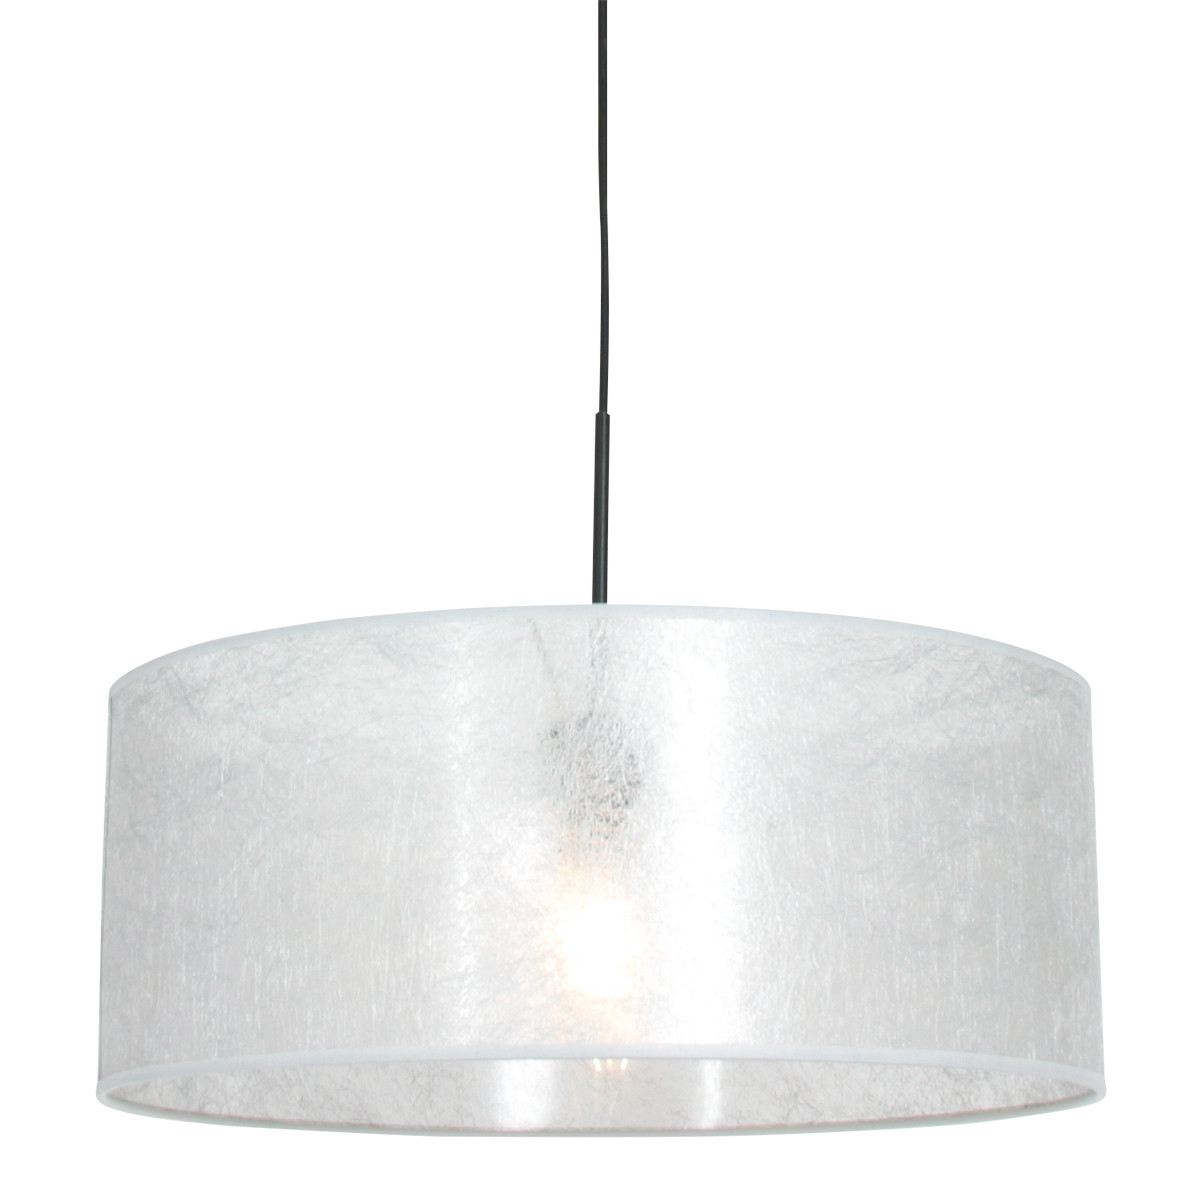 hanglamp-met-zilveren-sizoflor-kap-steinhauer-sparkled-light-8153zw